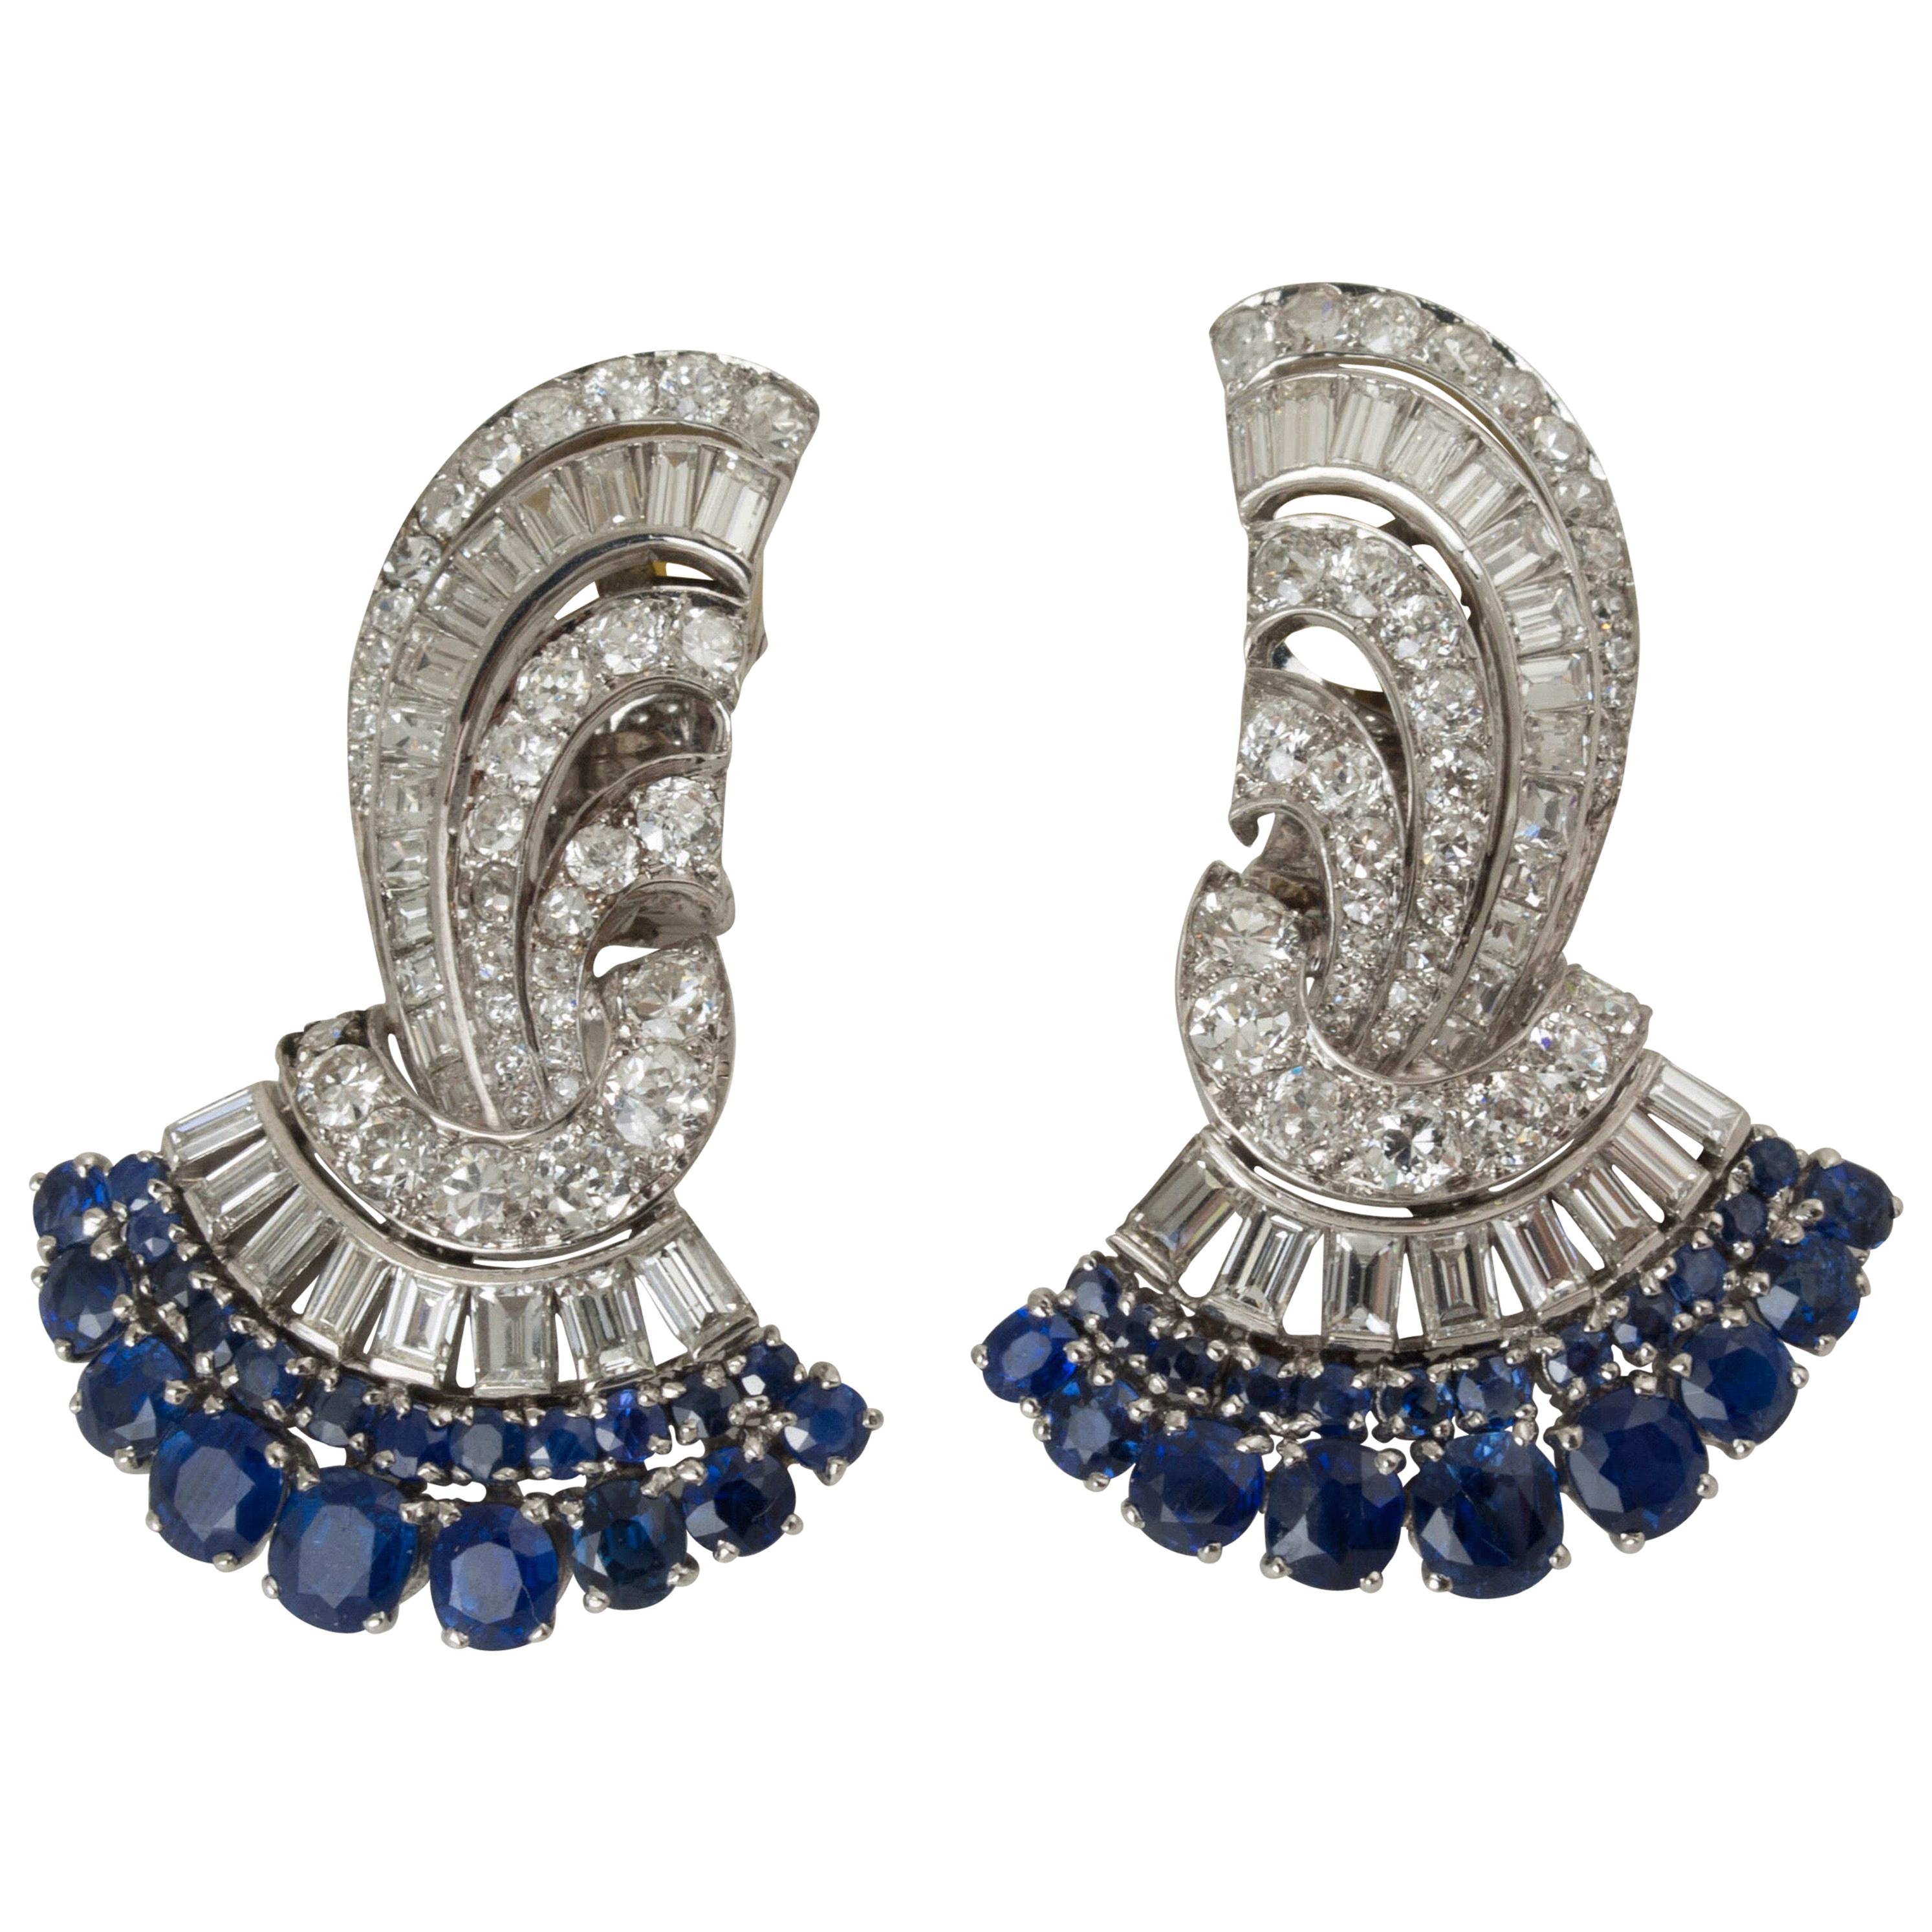 Pair of Art Deco Platinum, Sapphire, Diamond Fan Shaped Ear Clips